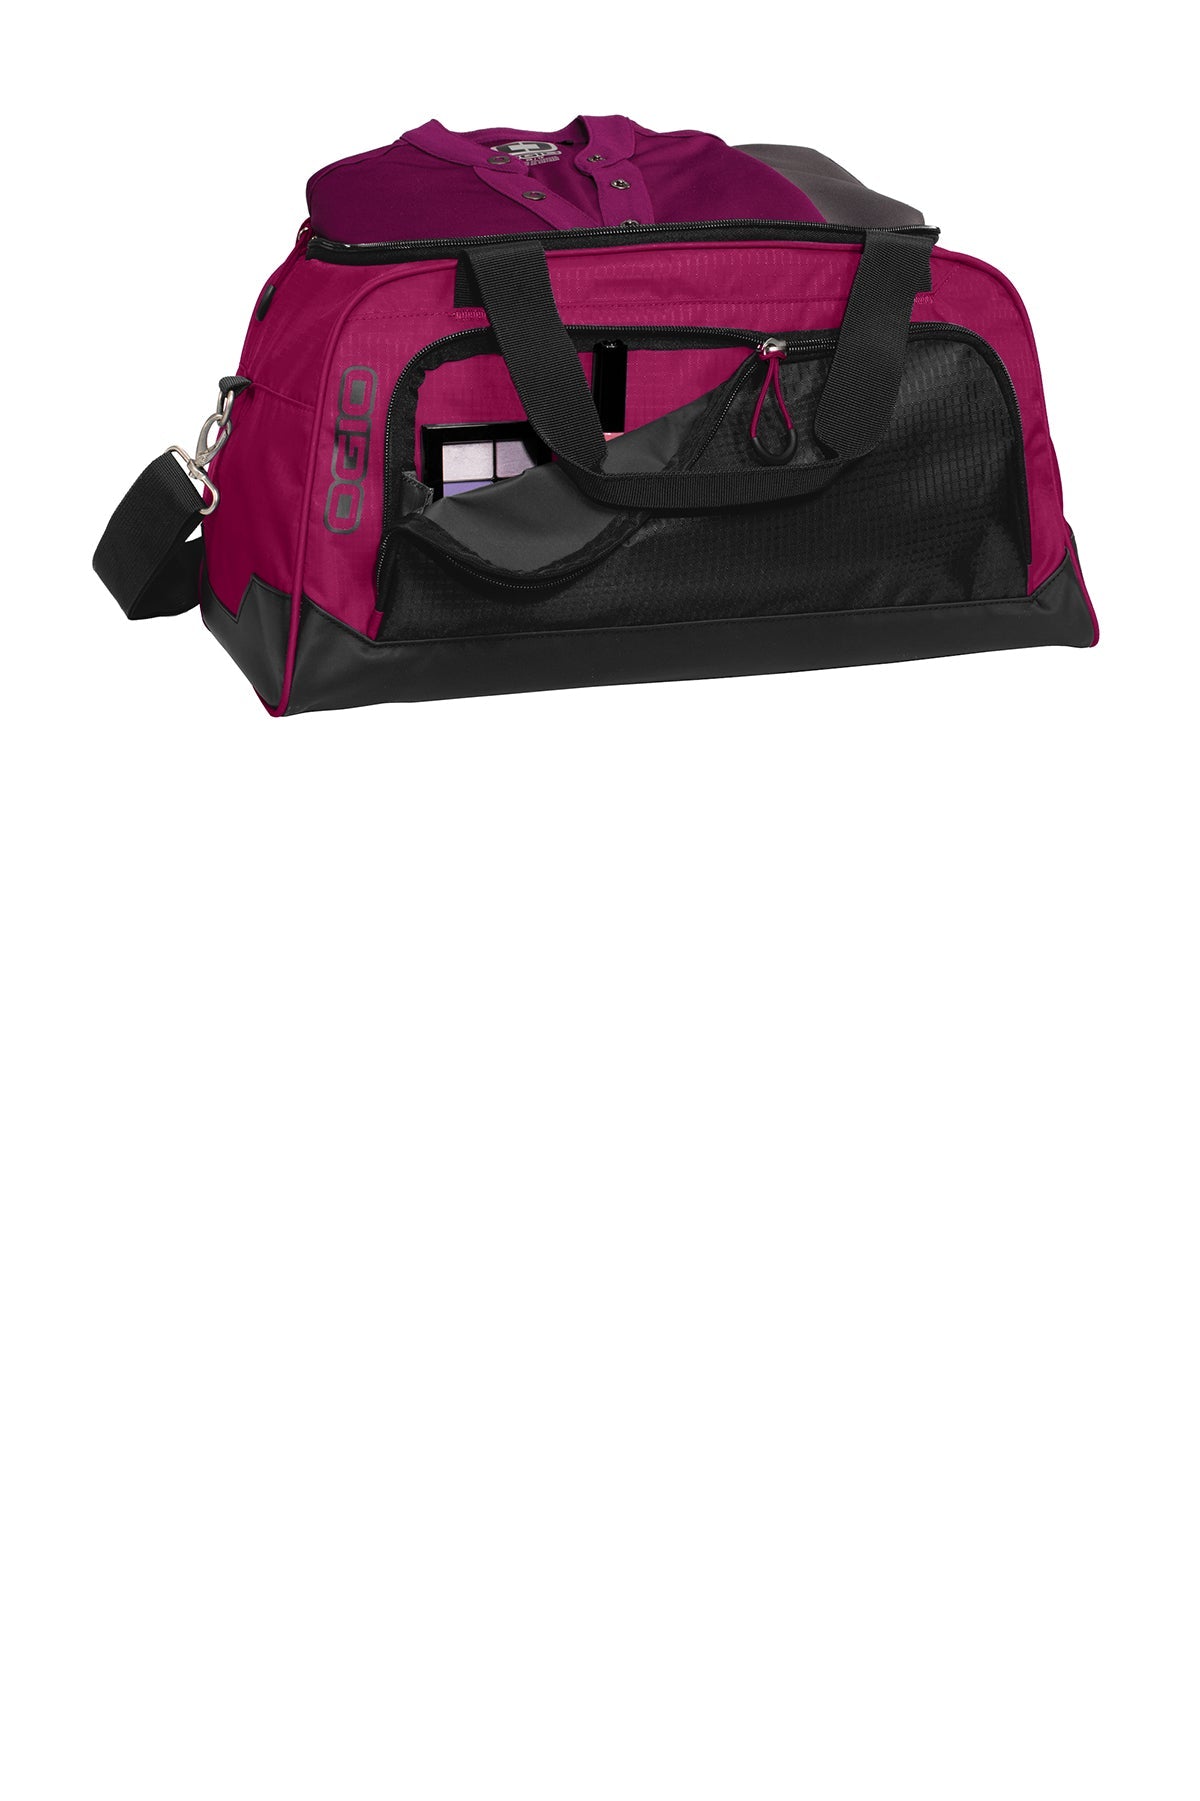 OGIO Breakaway Customized Duffel Bags, Flush Pink